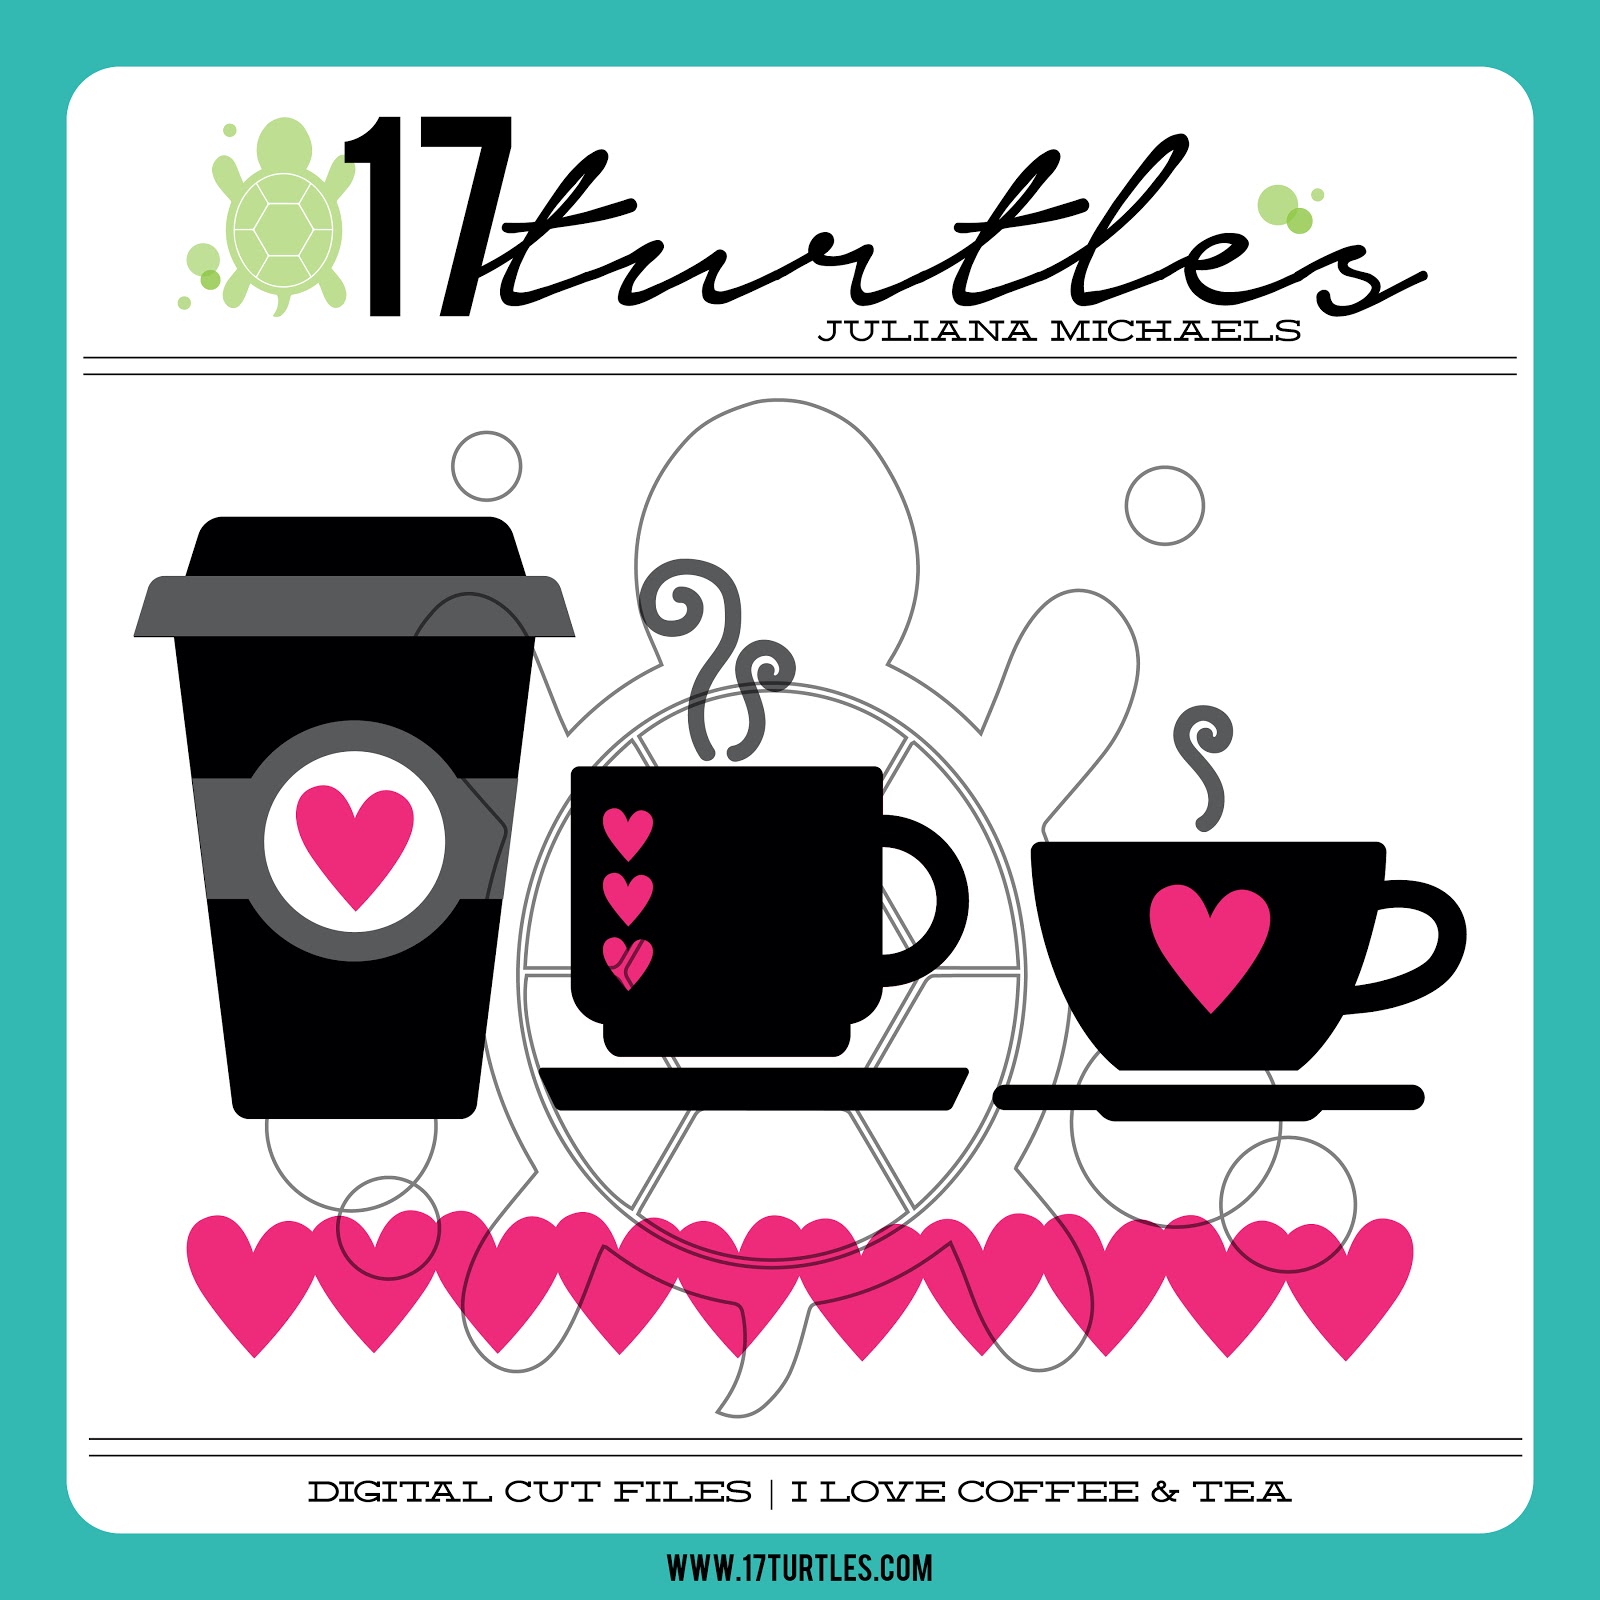 I Love Coffee & Tea Digital Cut File by 17turtles Juliana Michaels